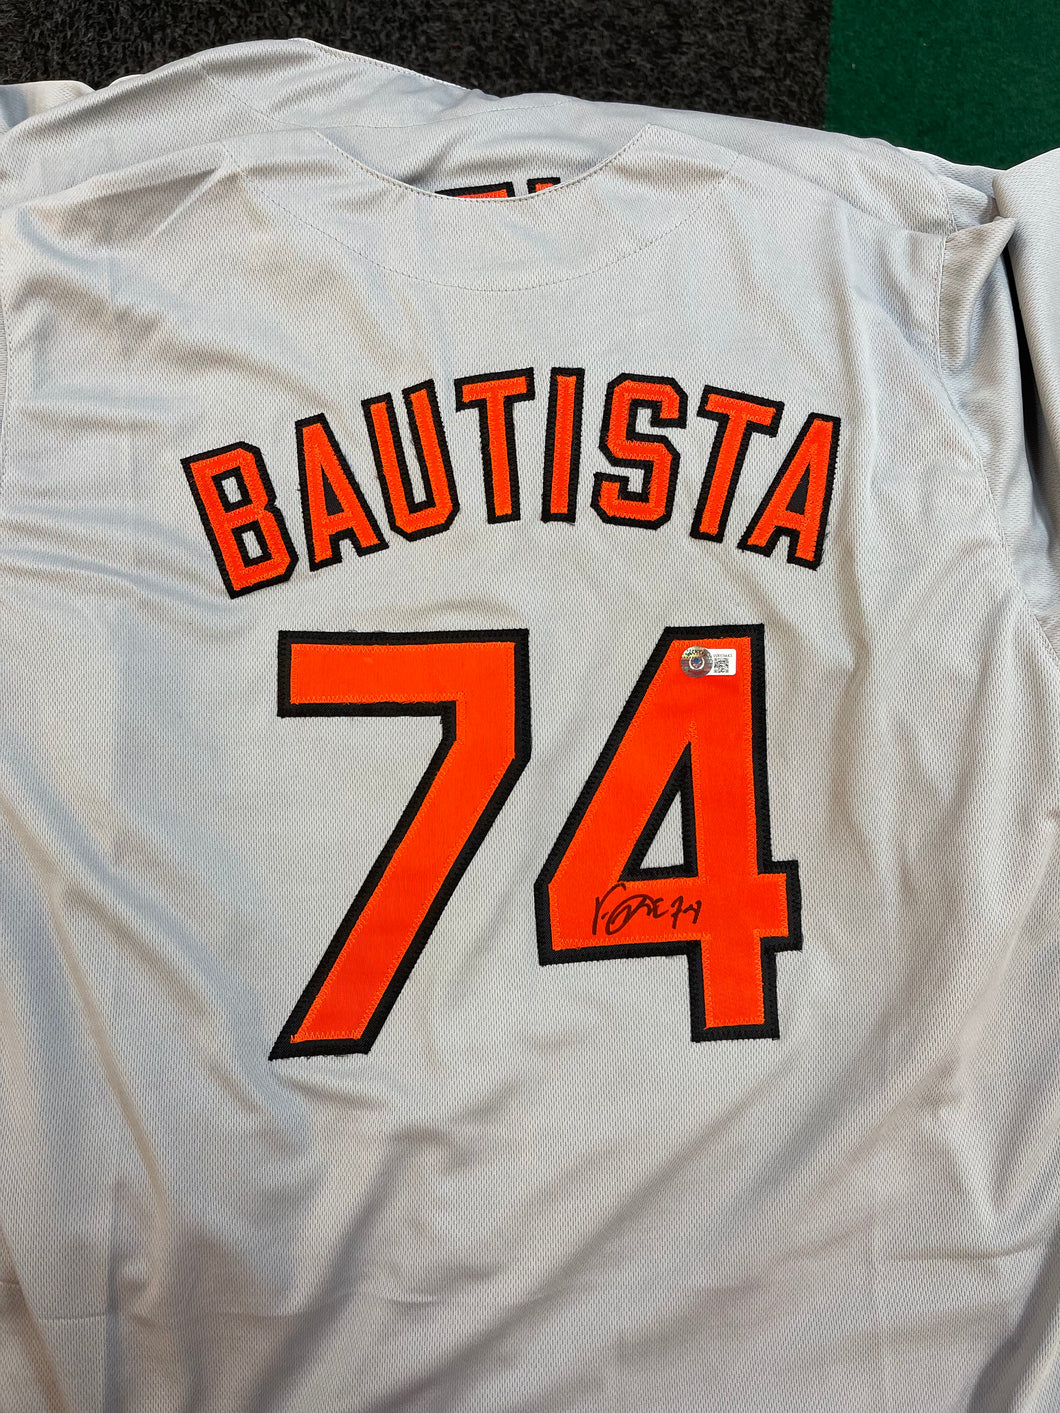 Felix Bautista autographed jersey